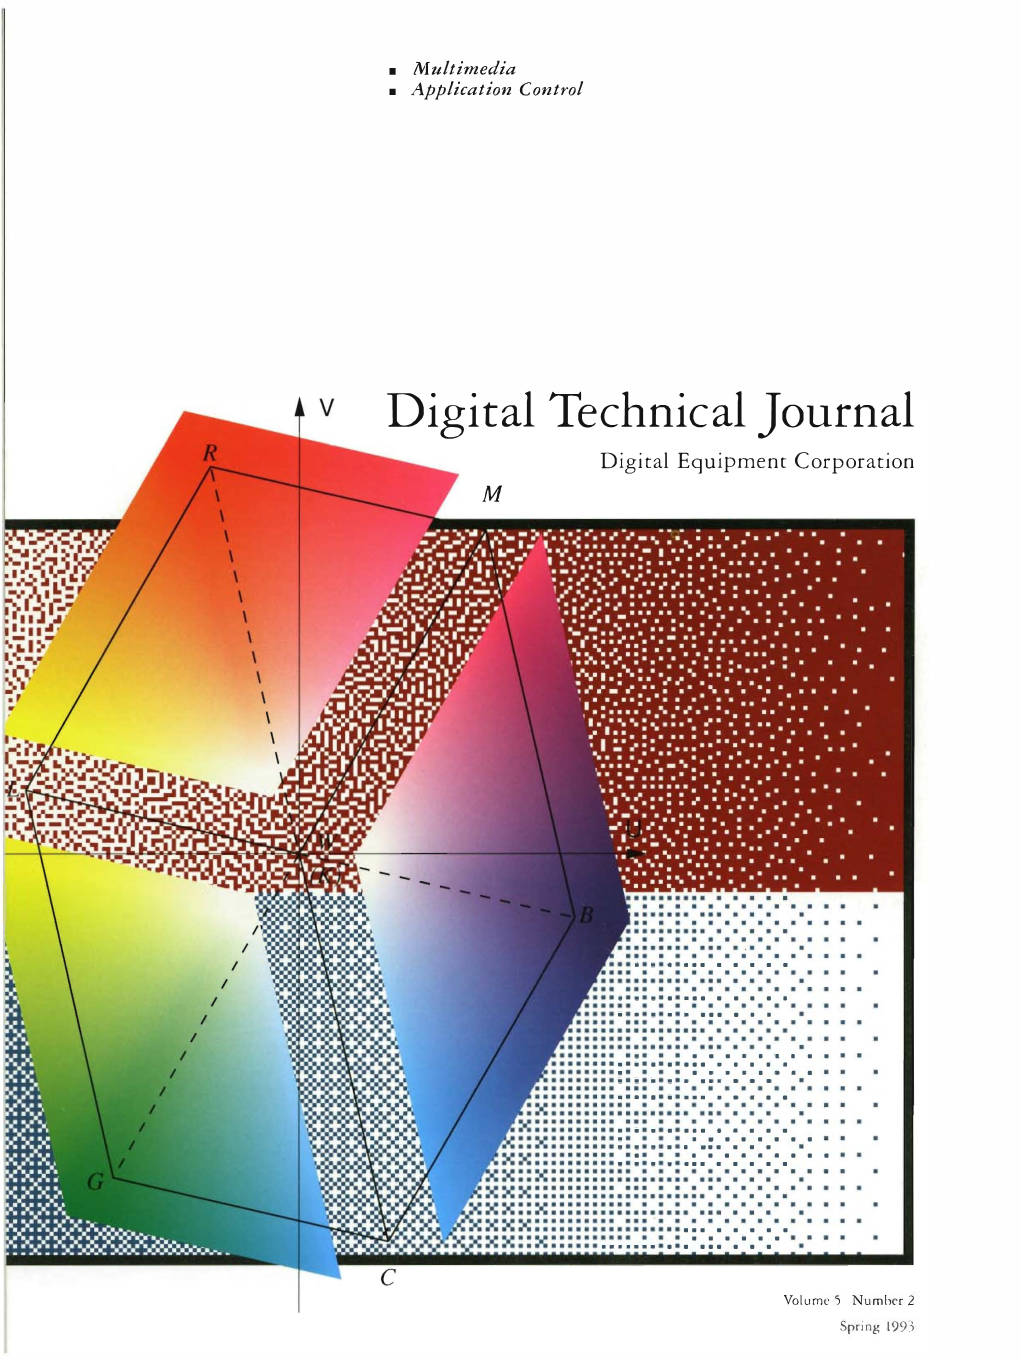 Digital Technical Journal, Volume 5, Number 2: Multimedia; Application